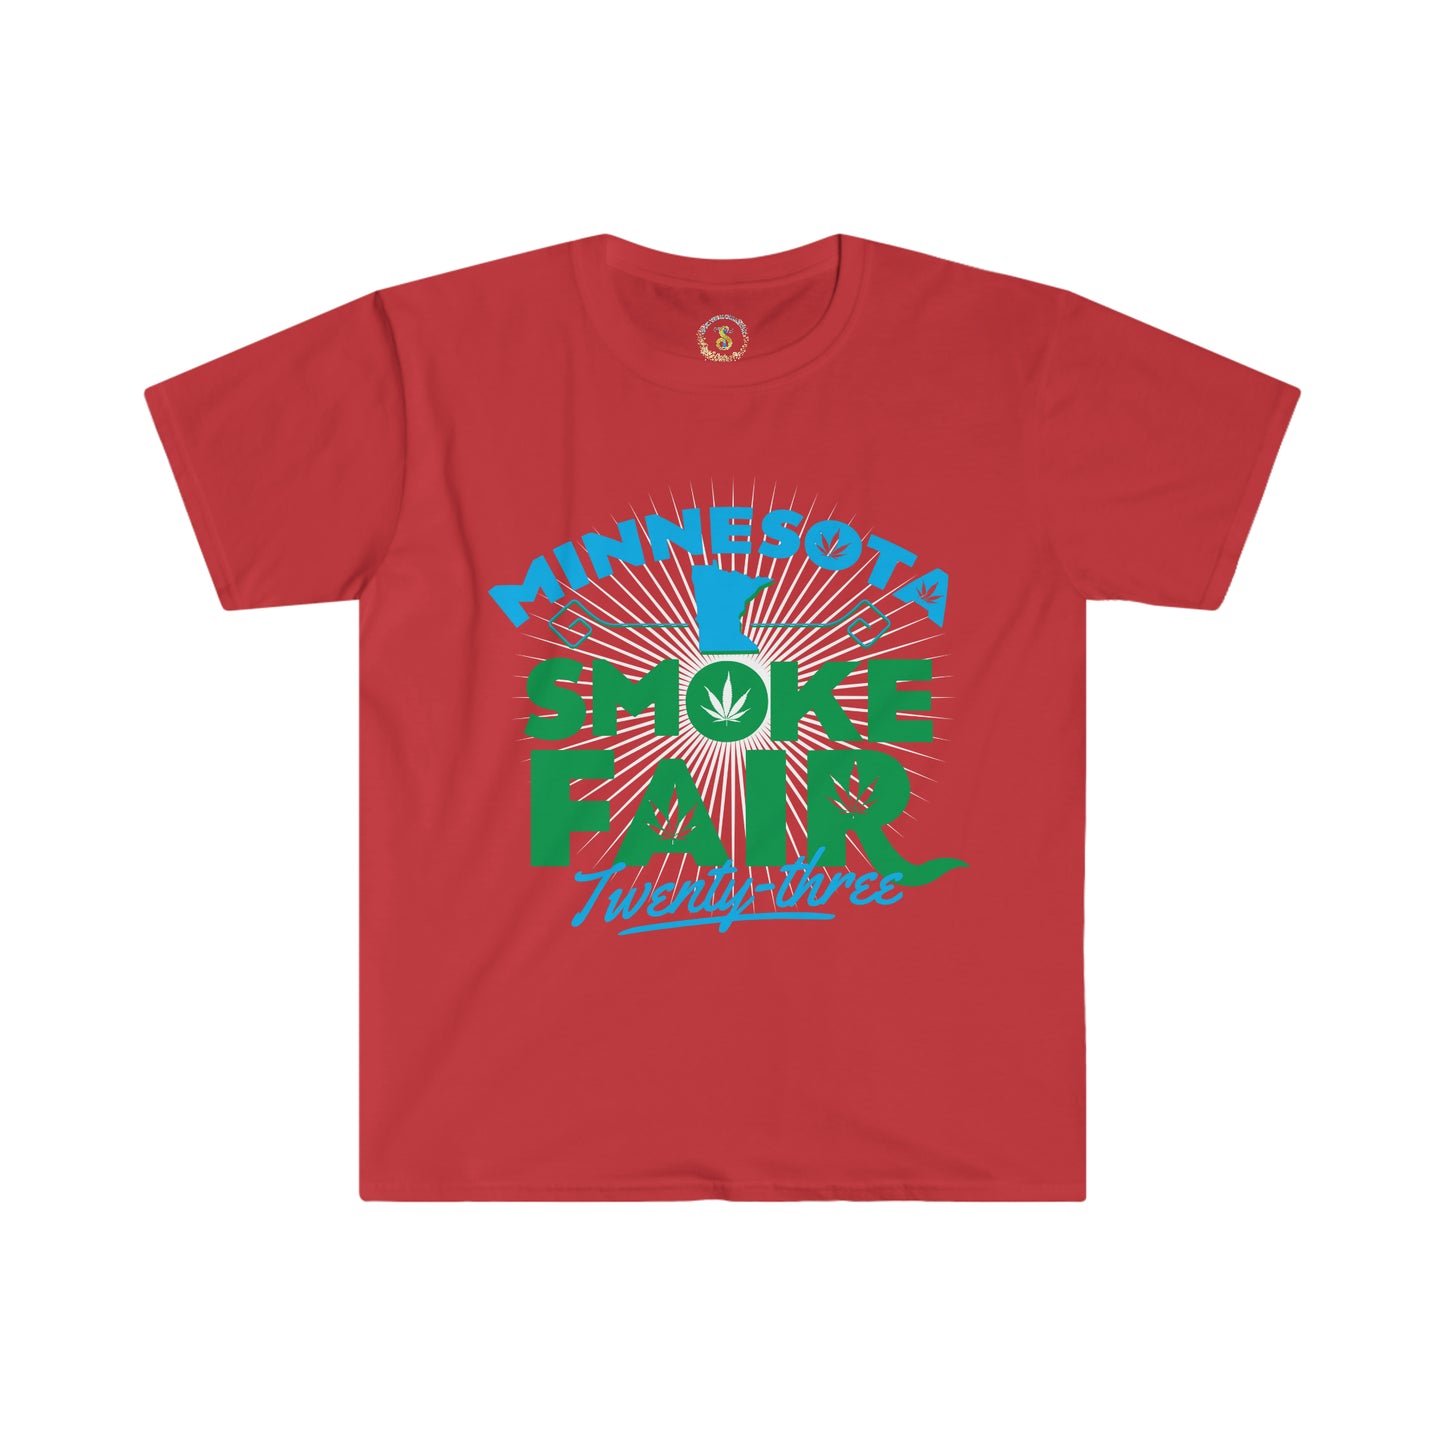 Minnesota Smoke Fair 23 | Minnesota Legal T-Shirt